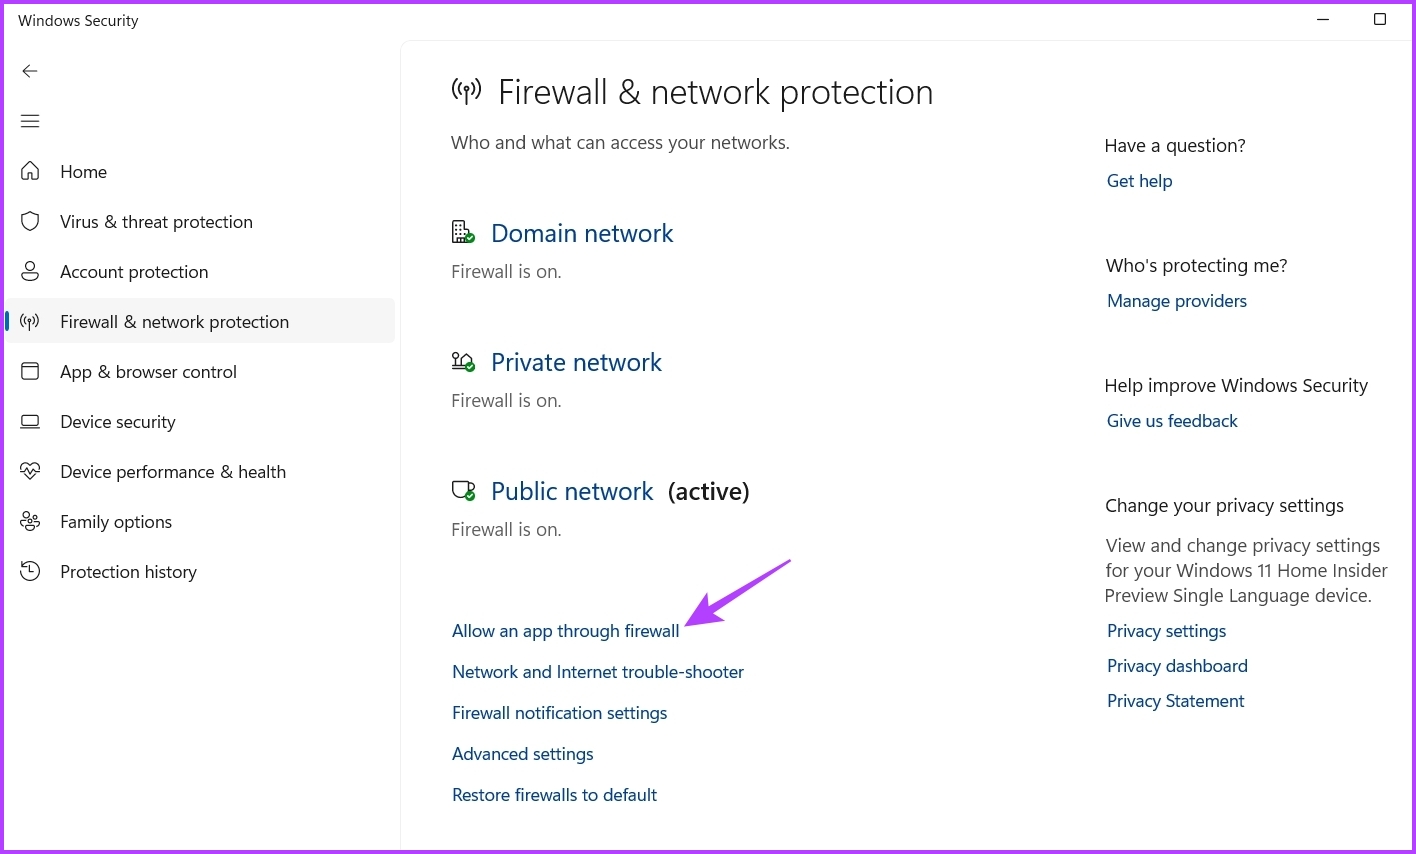 Allow an app through firewall option in Windows Security